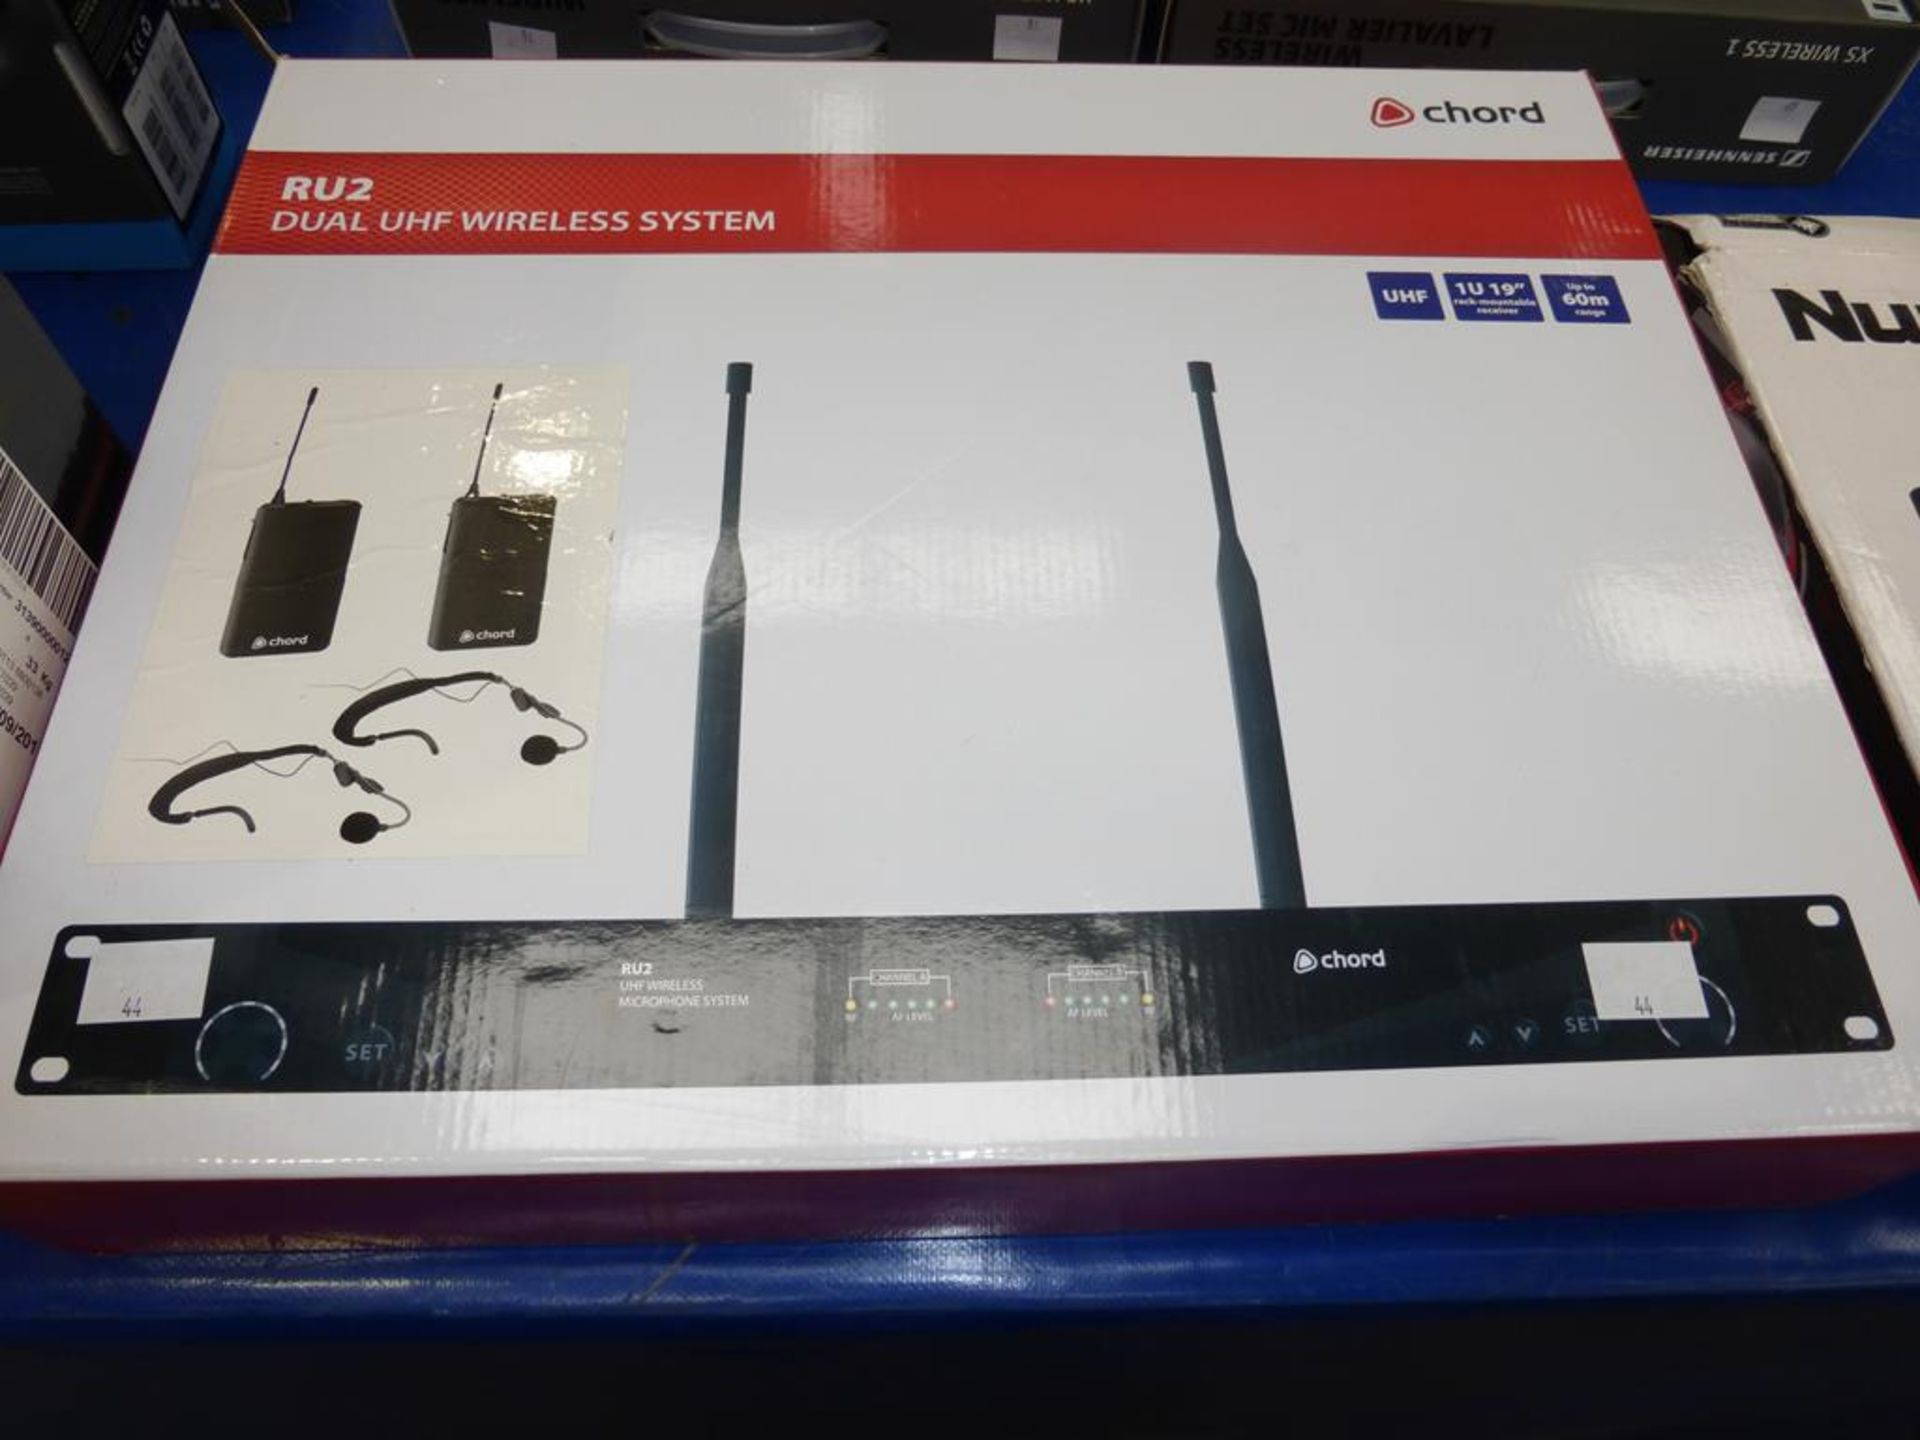 * A Chord RU2 Dual UHF Wireless System (RRP £124.99)